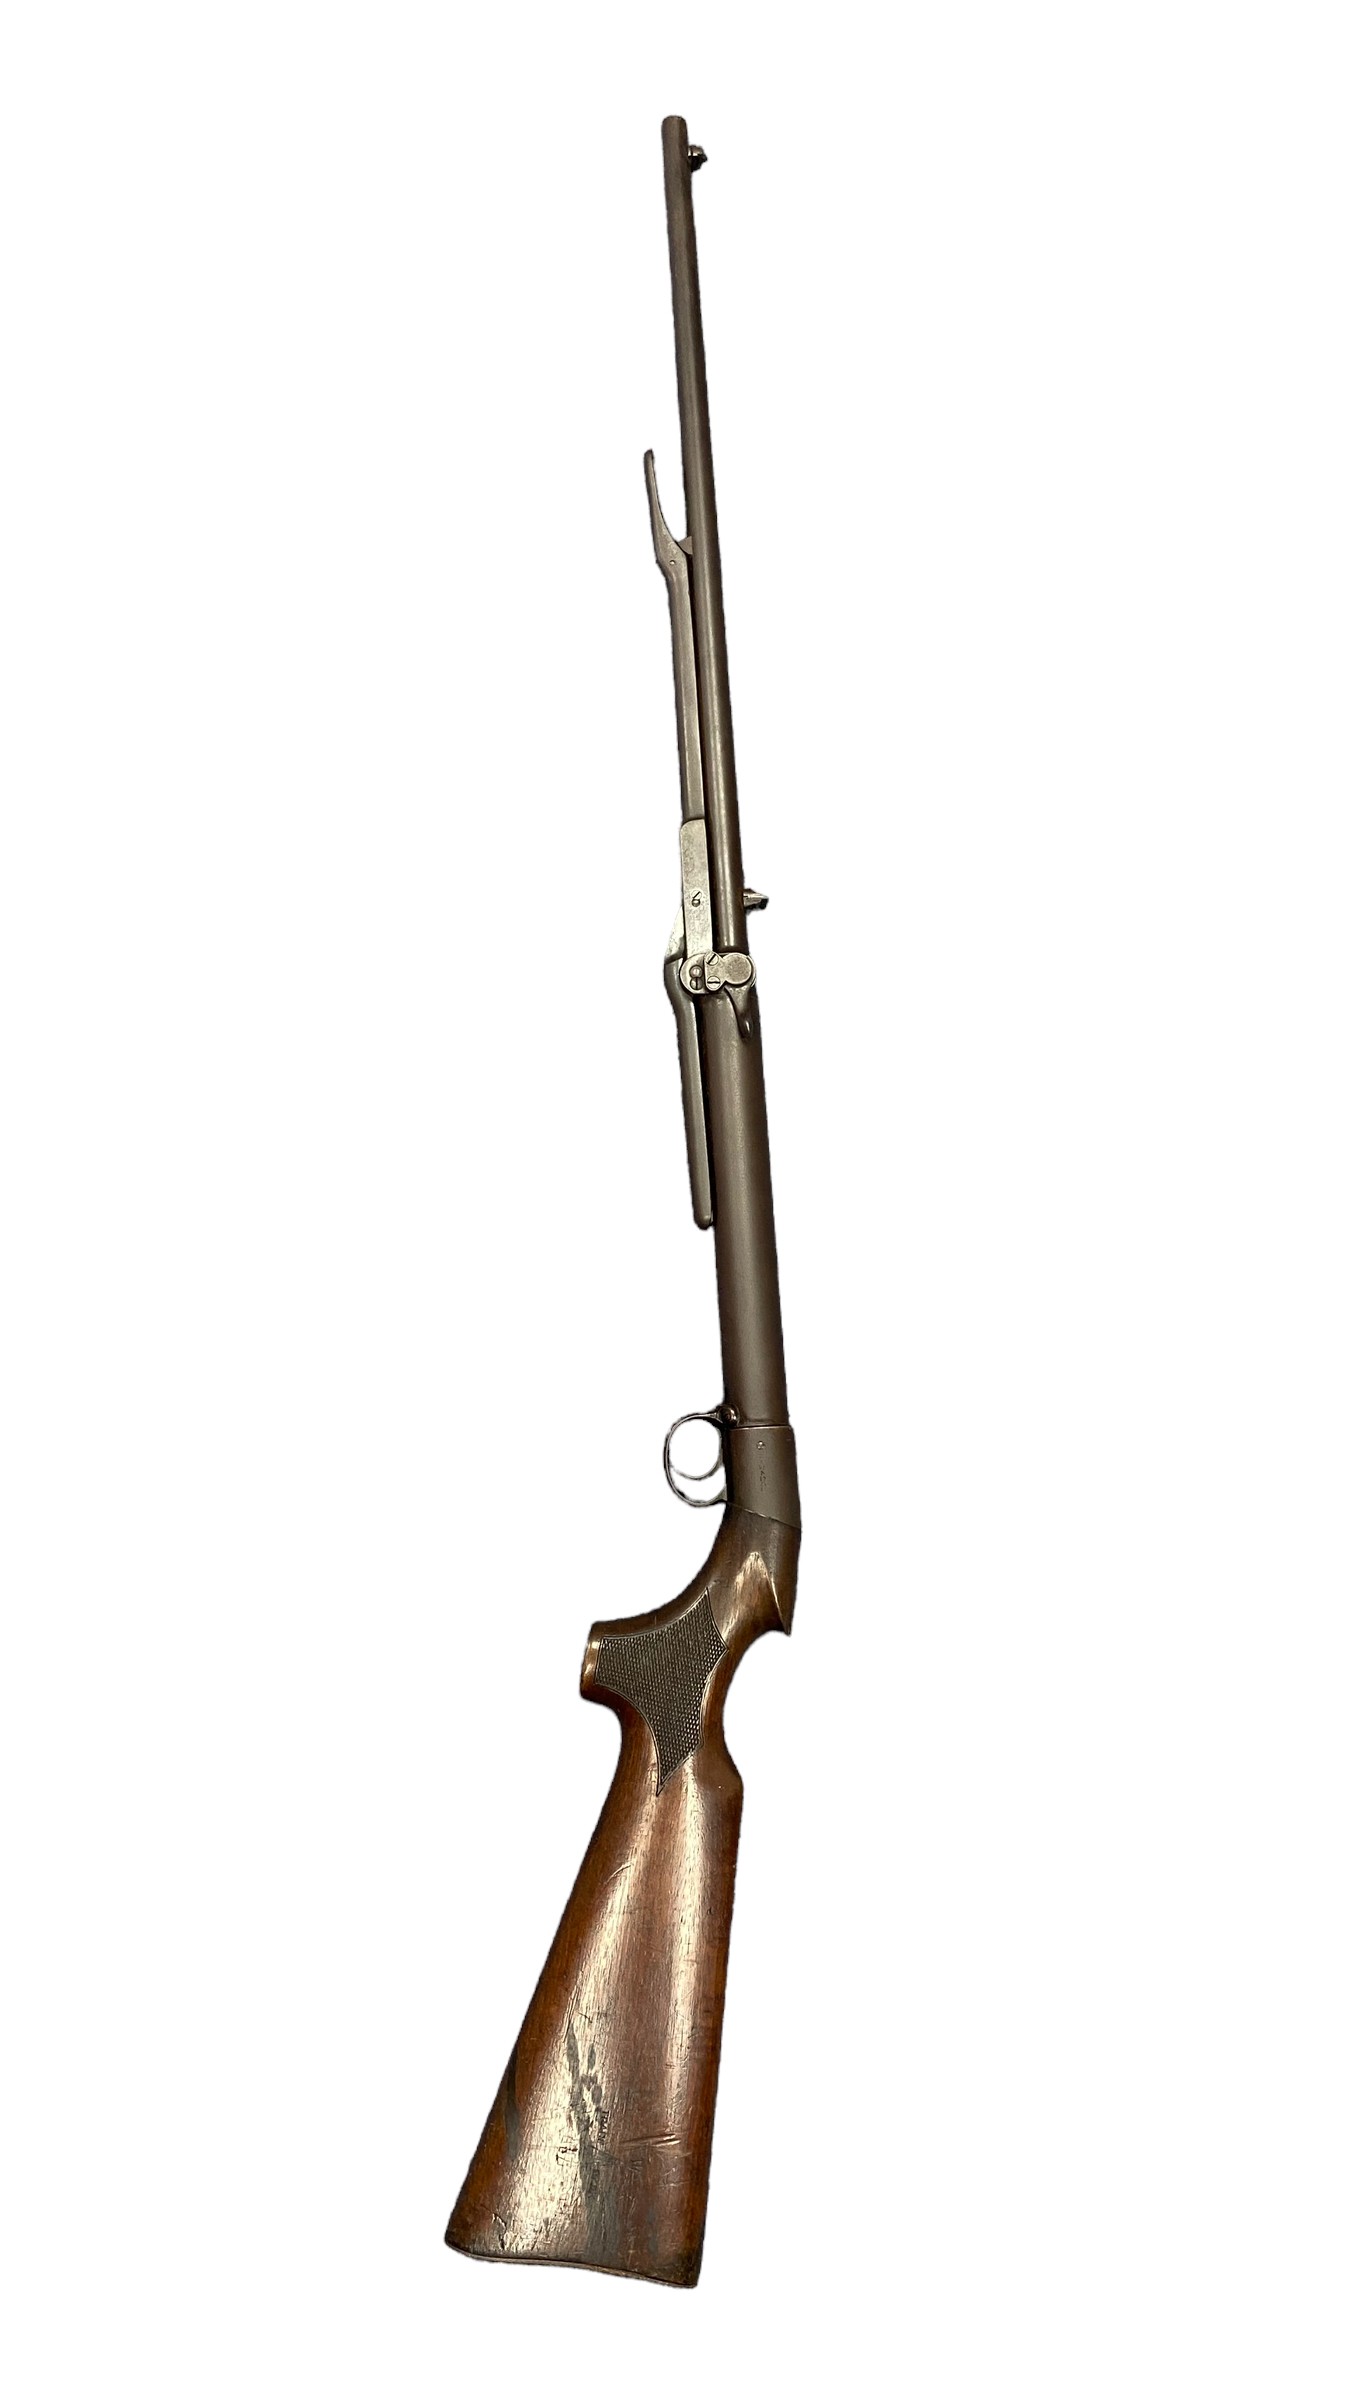 BSA Improved model D .177 under lever Air Rifle. Serial number 24269. Adjustable trigger and - Image 6 of 6